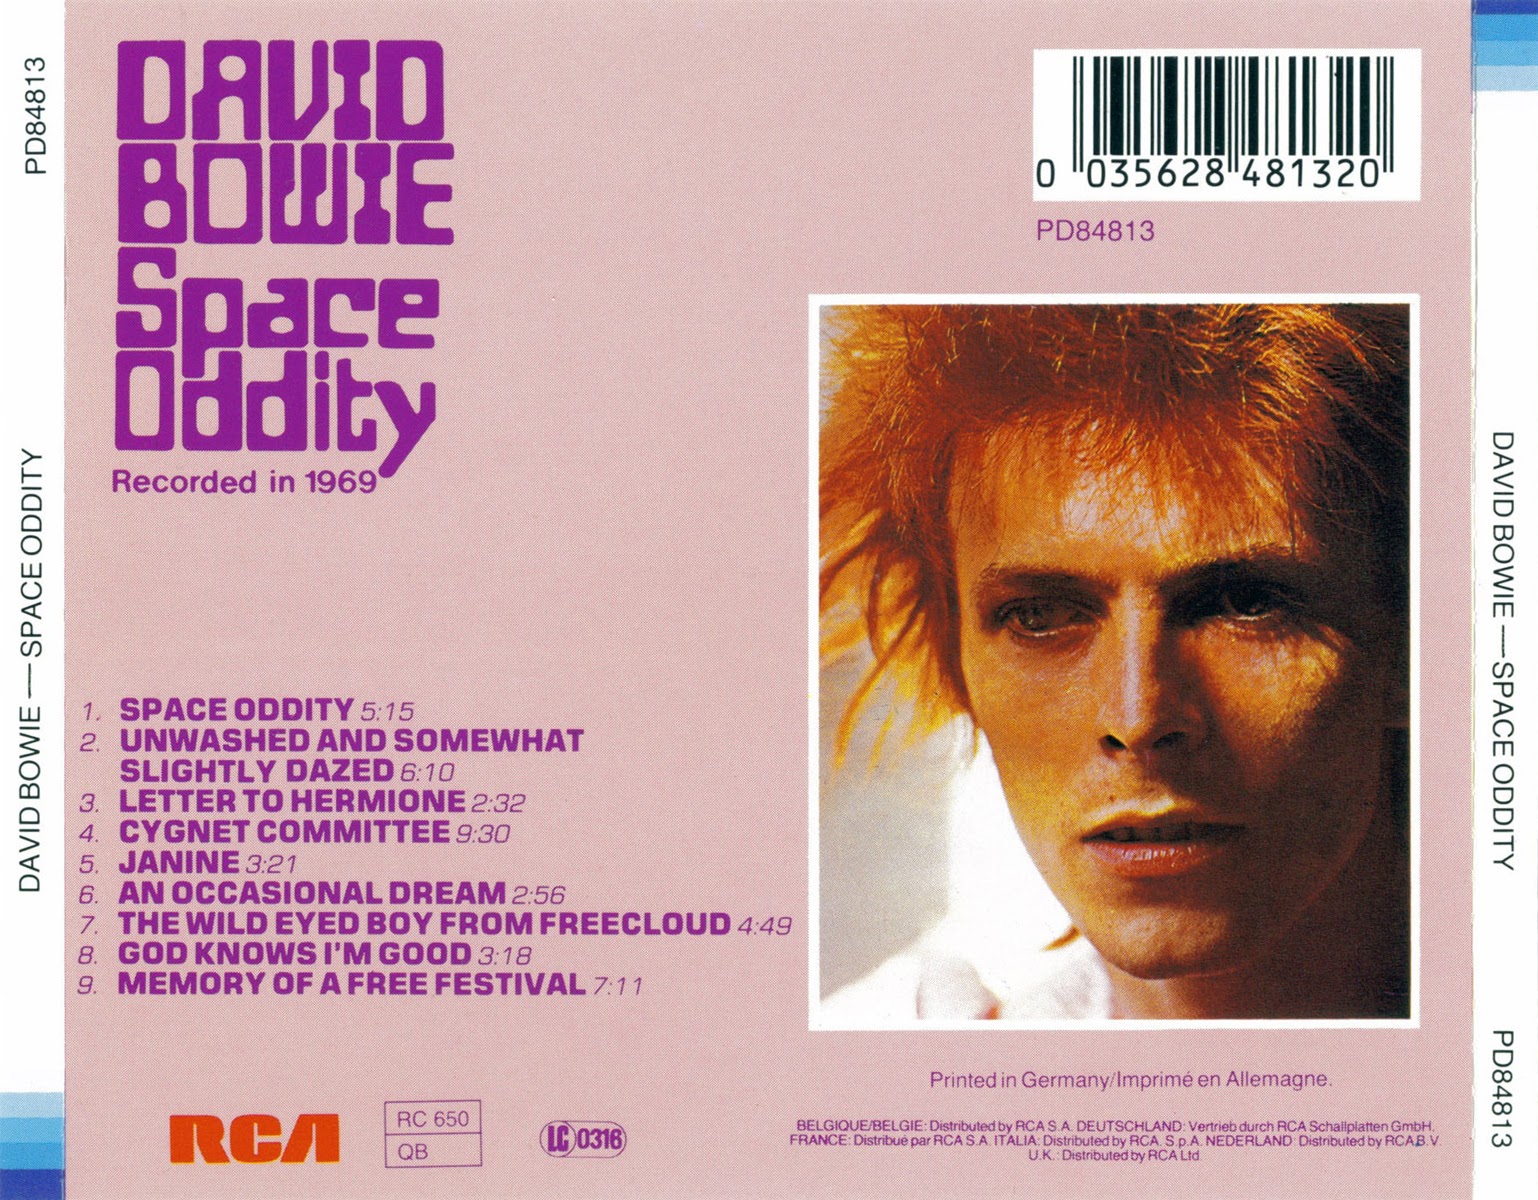 David bowie's space oddity. David Bowie 1969. Дэвид Боуи Life 1969. Space Oddity 1969. Space Oddity David Bowie обложка.